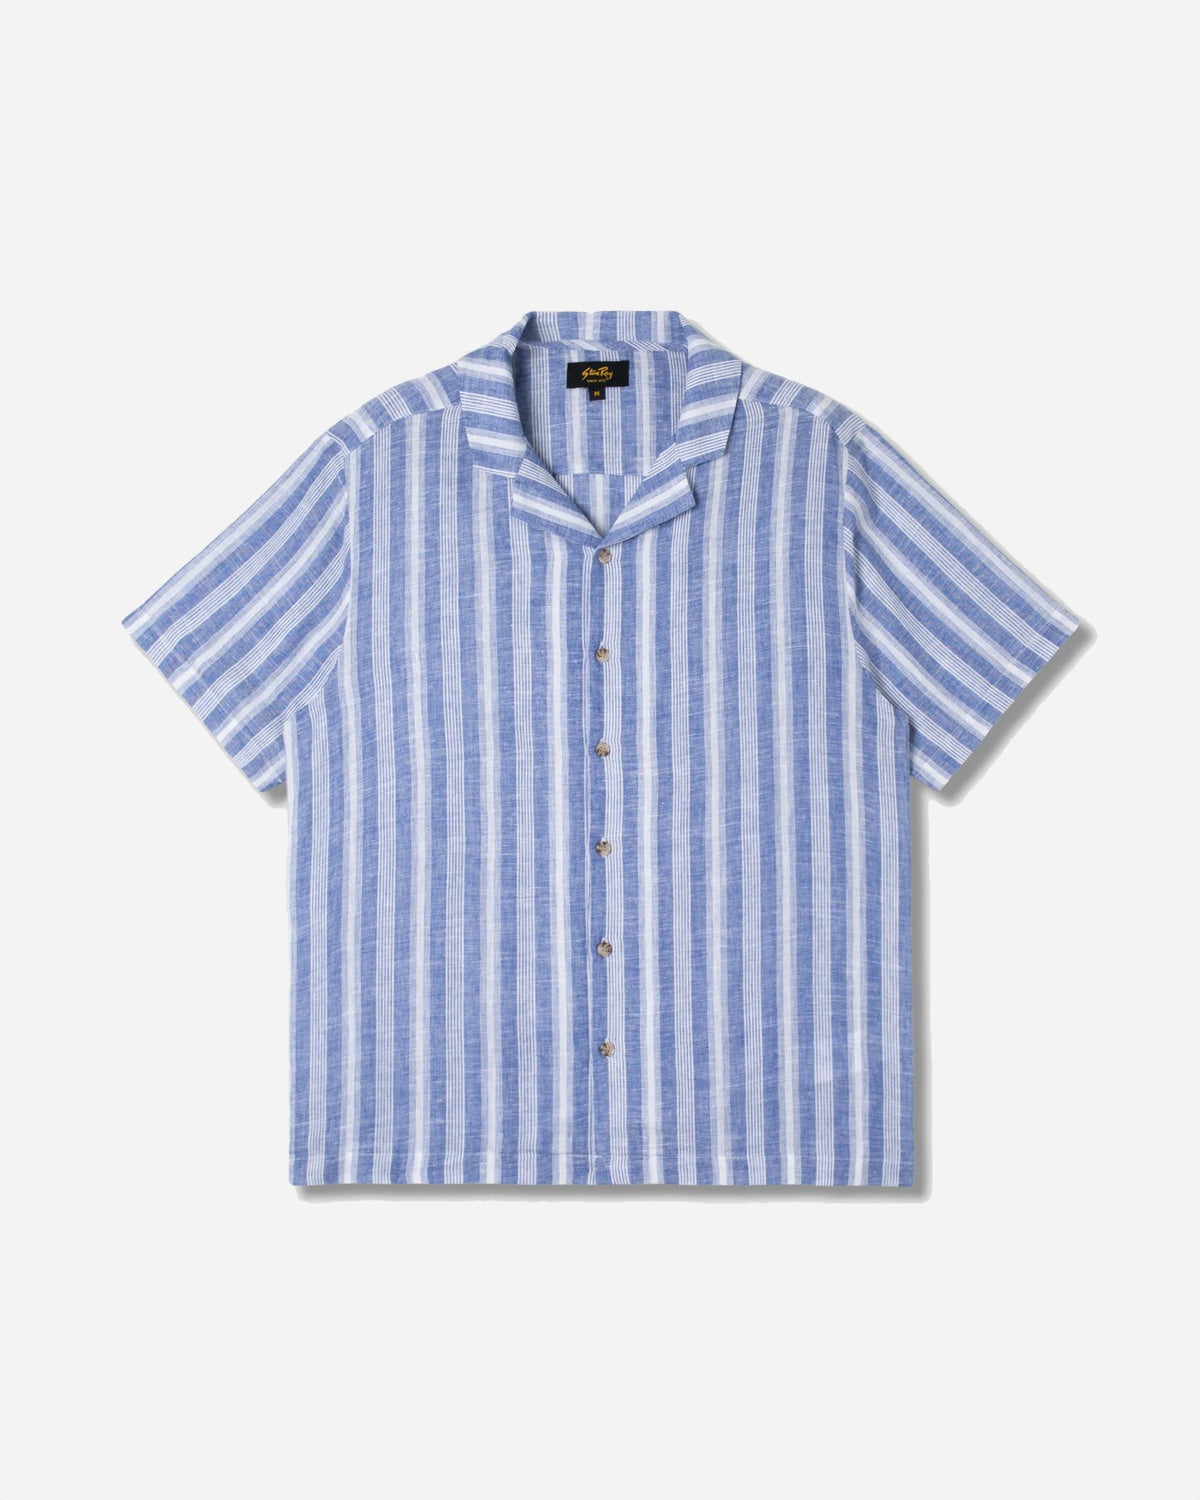 Club Shirt - Navy Multi Stripe